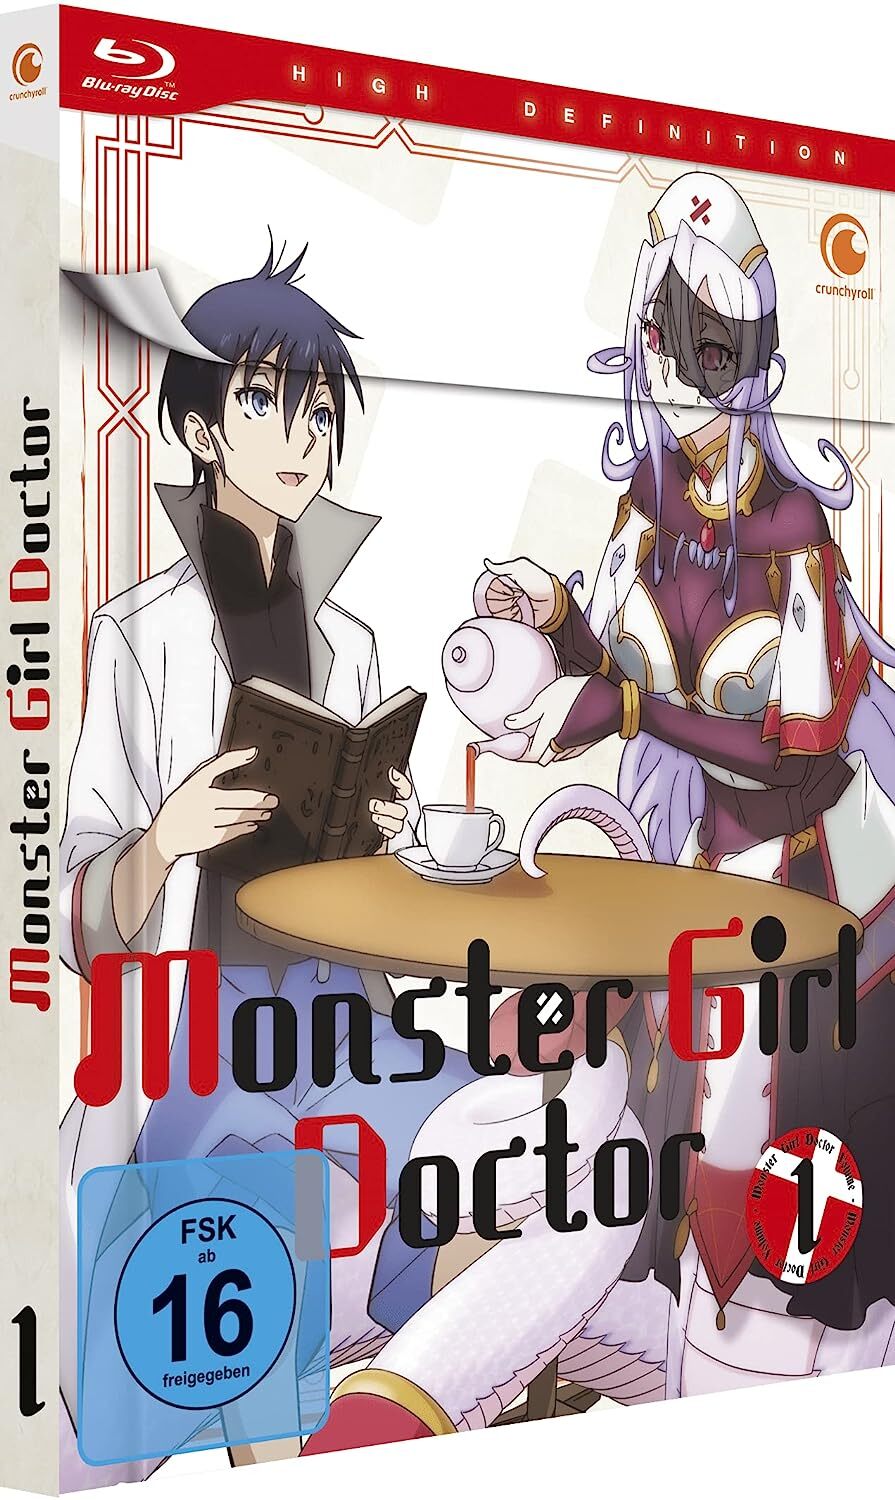 Watch Monster Girl Doctor - Crunchyroll